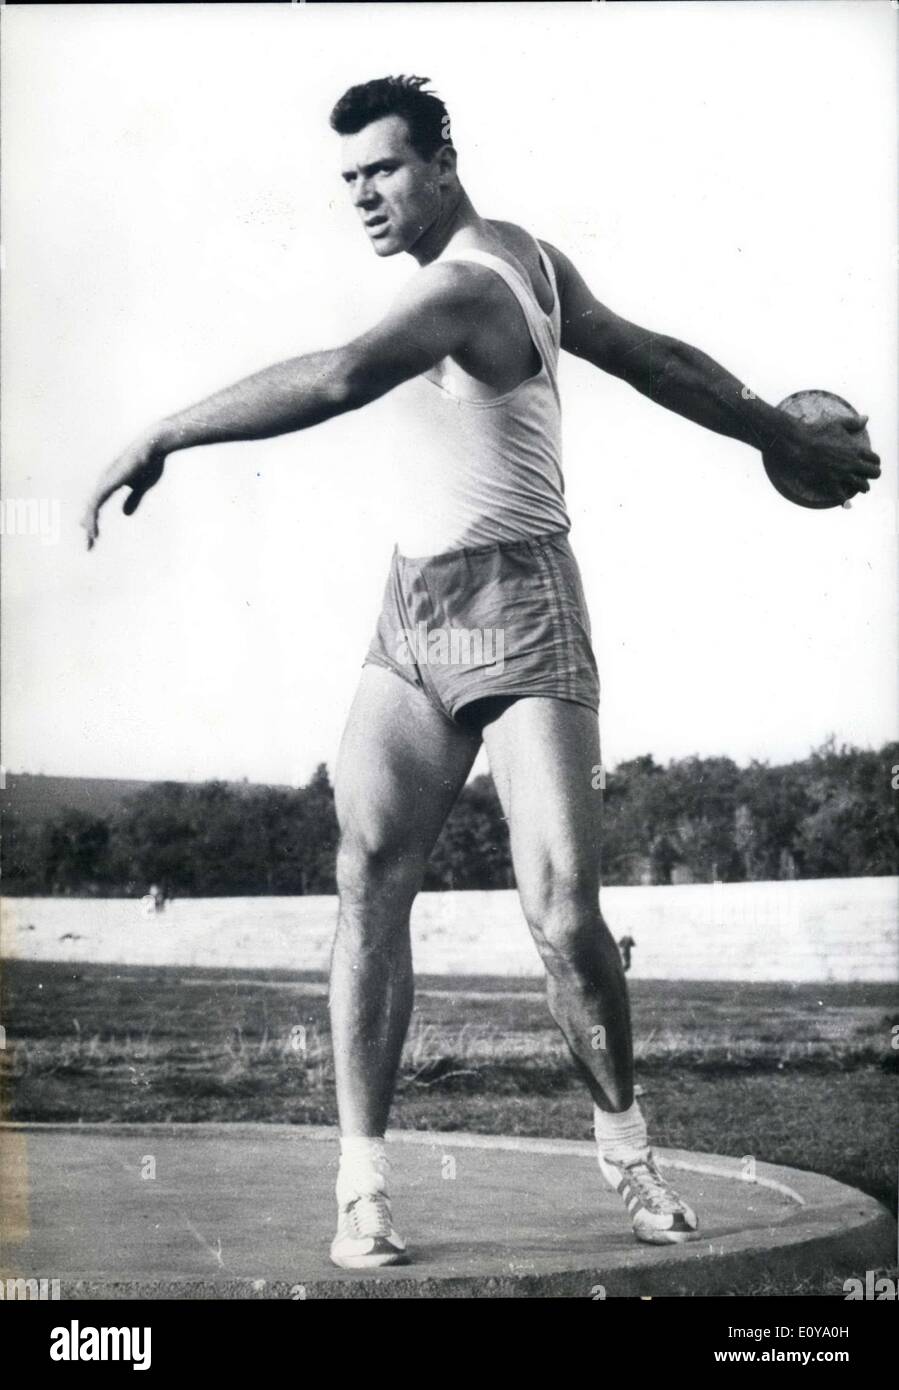 Giugno 10, 1969 - Discus thrower, Ludvik Danek set di record europeo Foto Stock